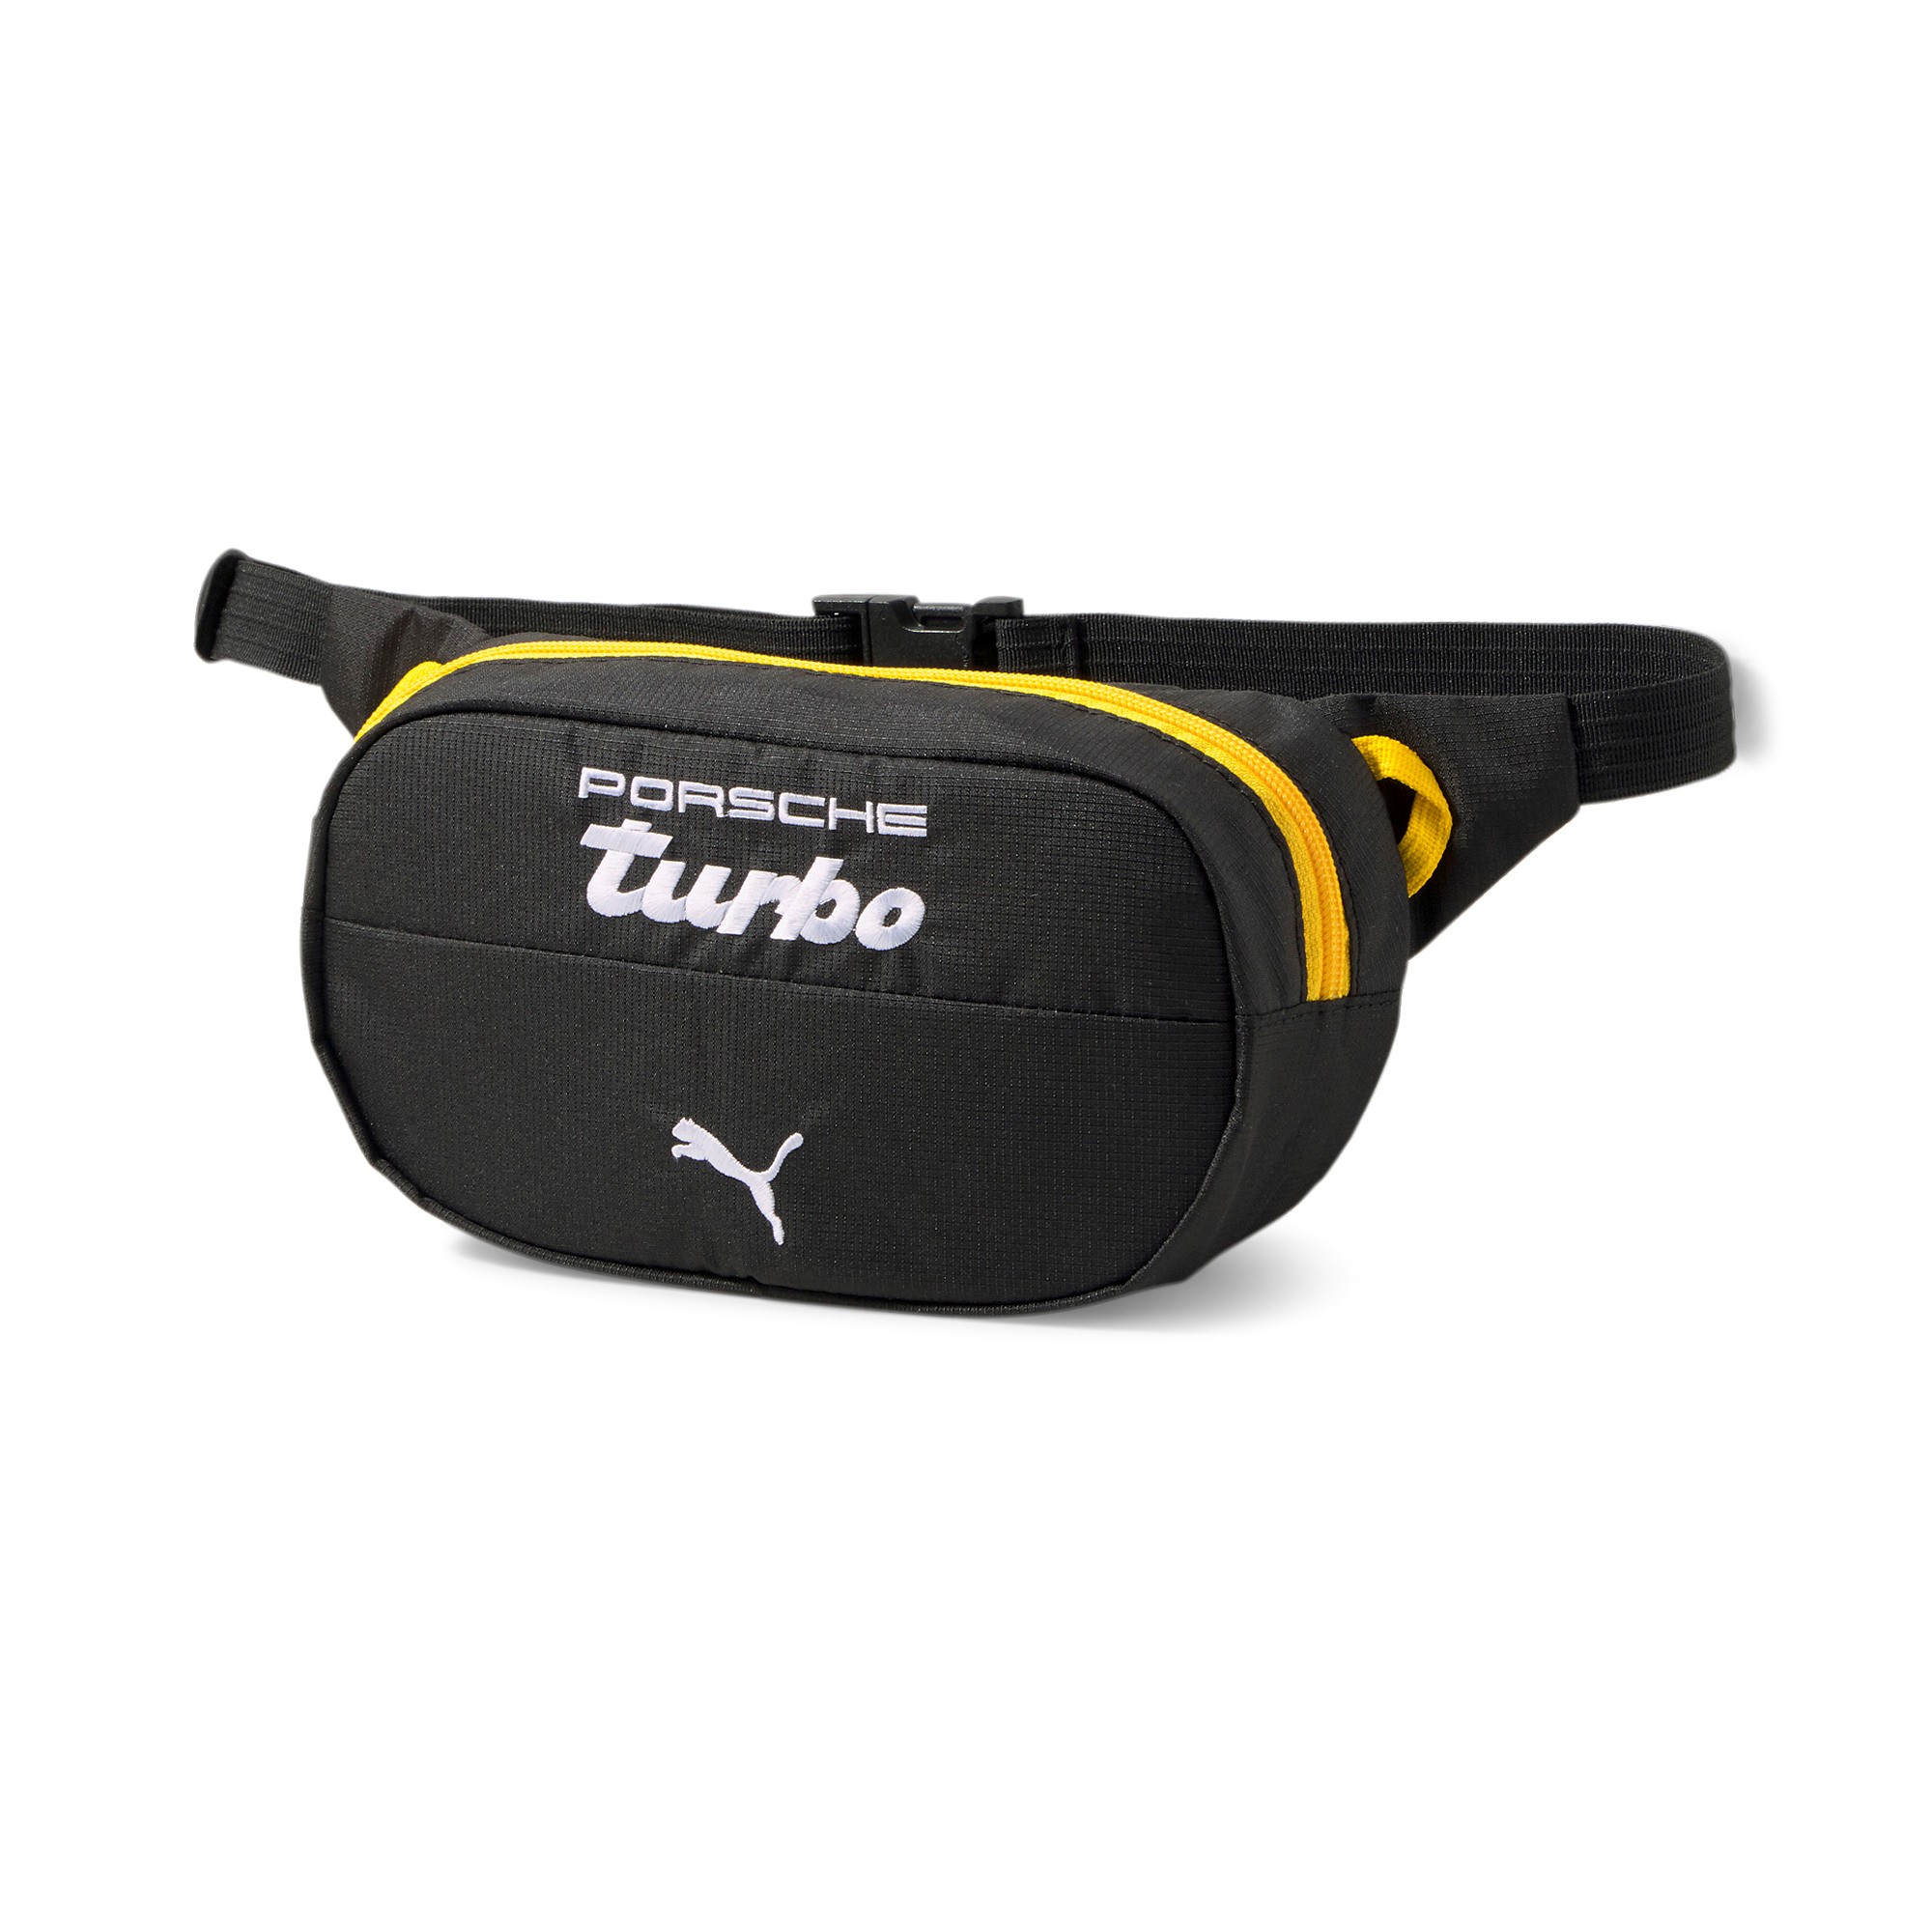 Porsche Legacy Puma waist bag "Turbo" - black